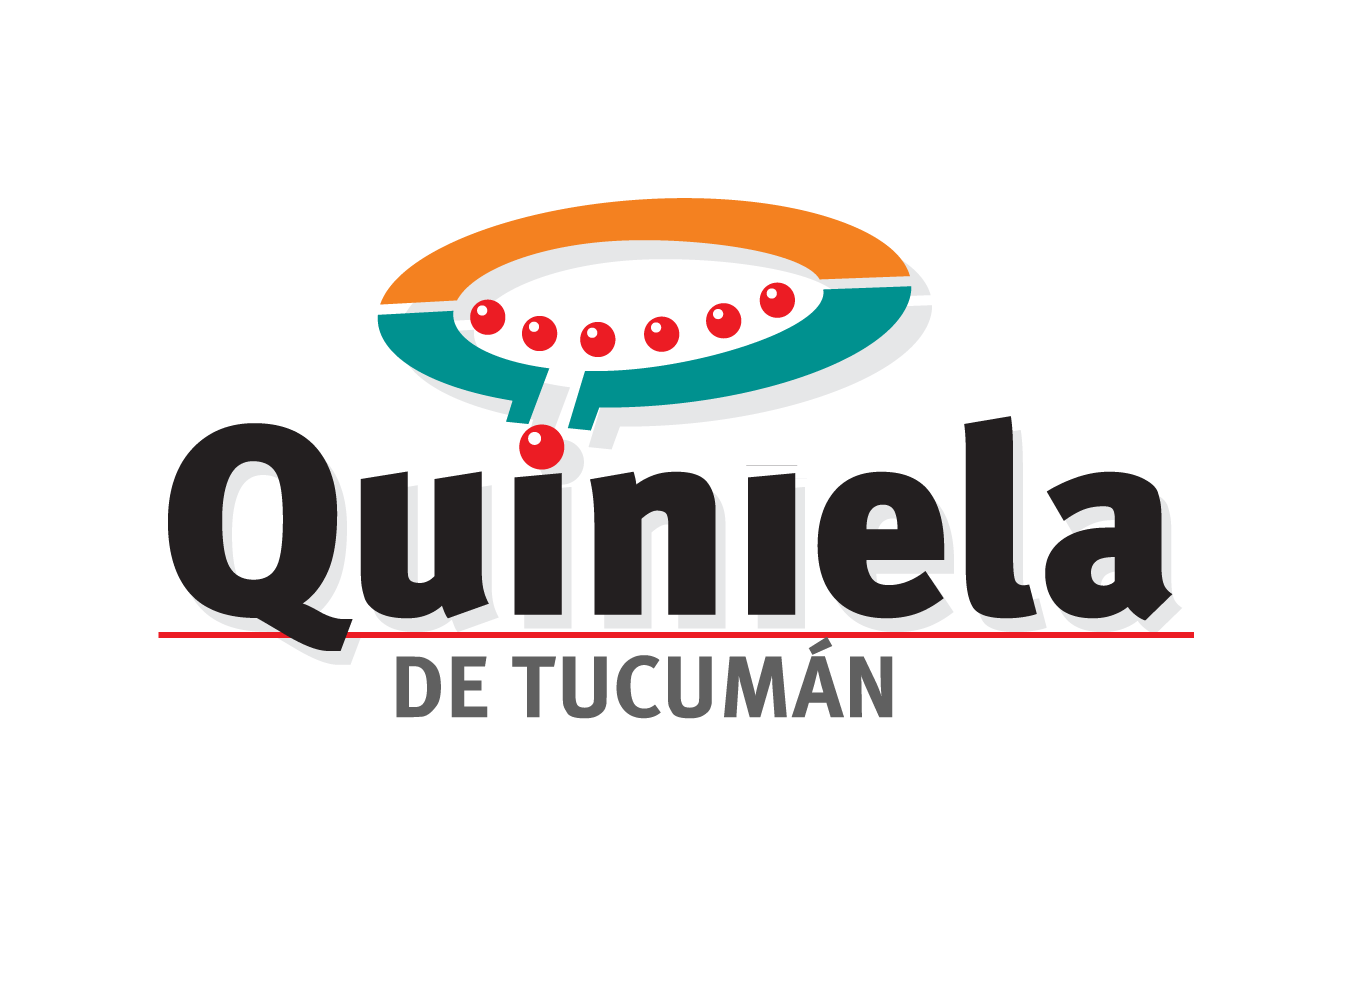 Quiniela: Apostá desde tu celular - Caja Popular de Ahorros Tucumán